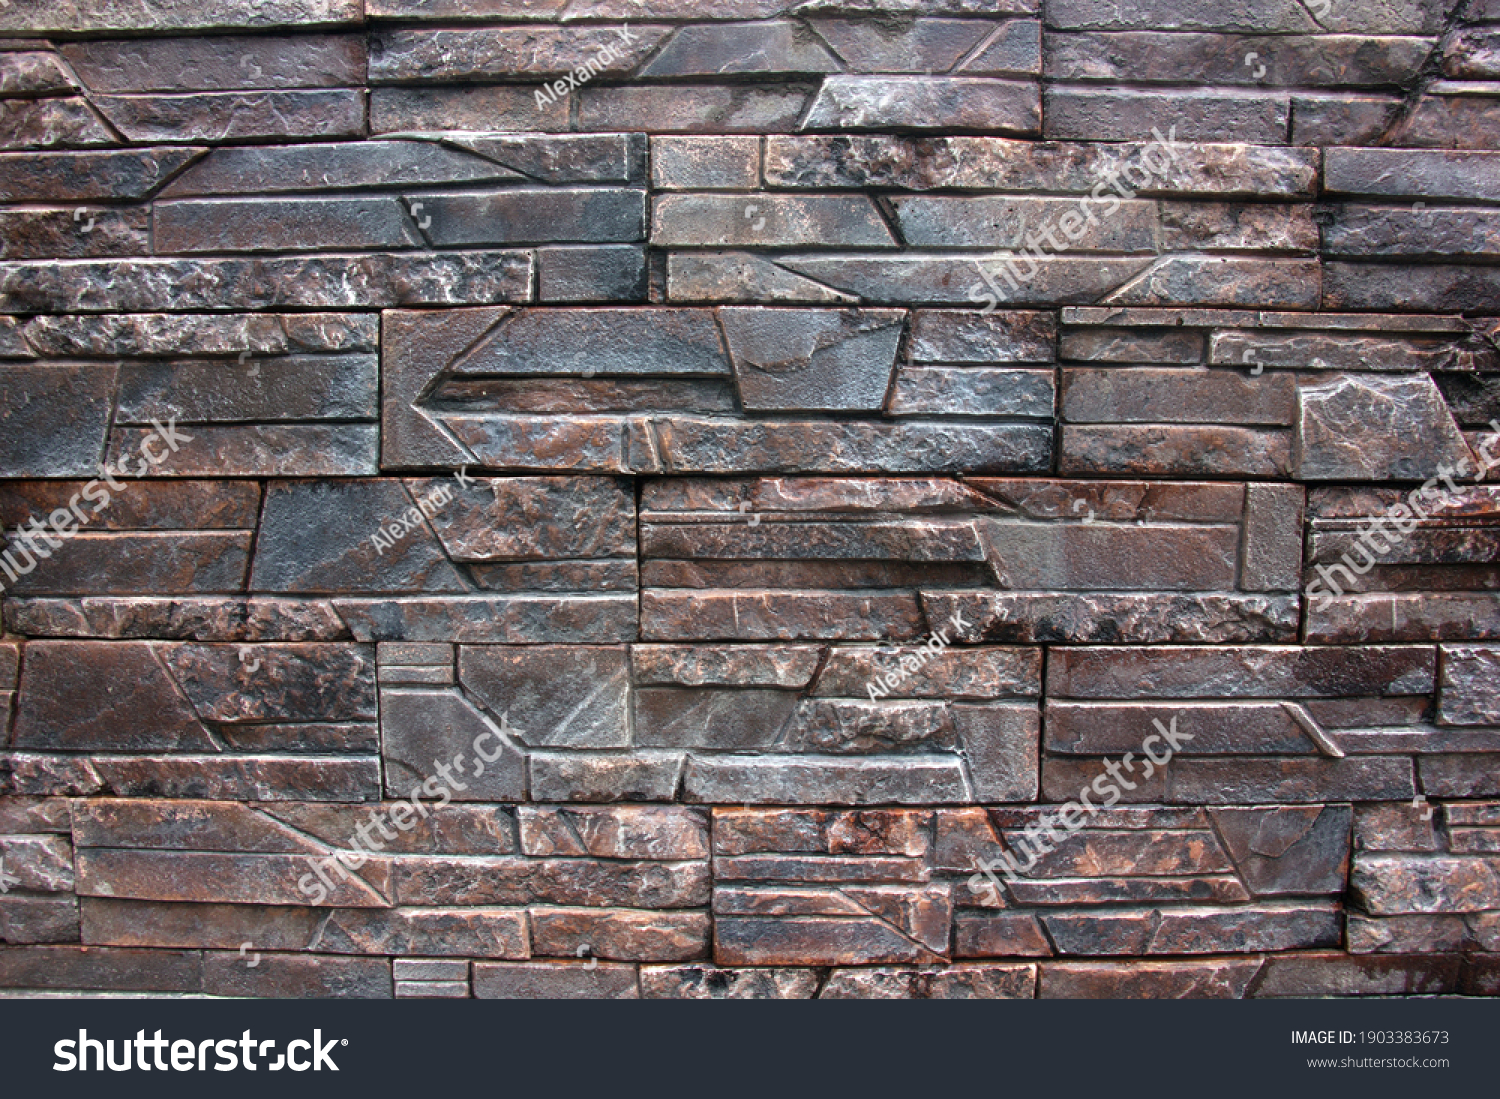 Background. Texture. Old stone wall. Desktop wallpaper concept. Natural natural building materials. #1903383673